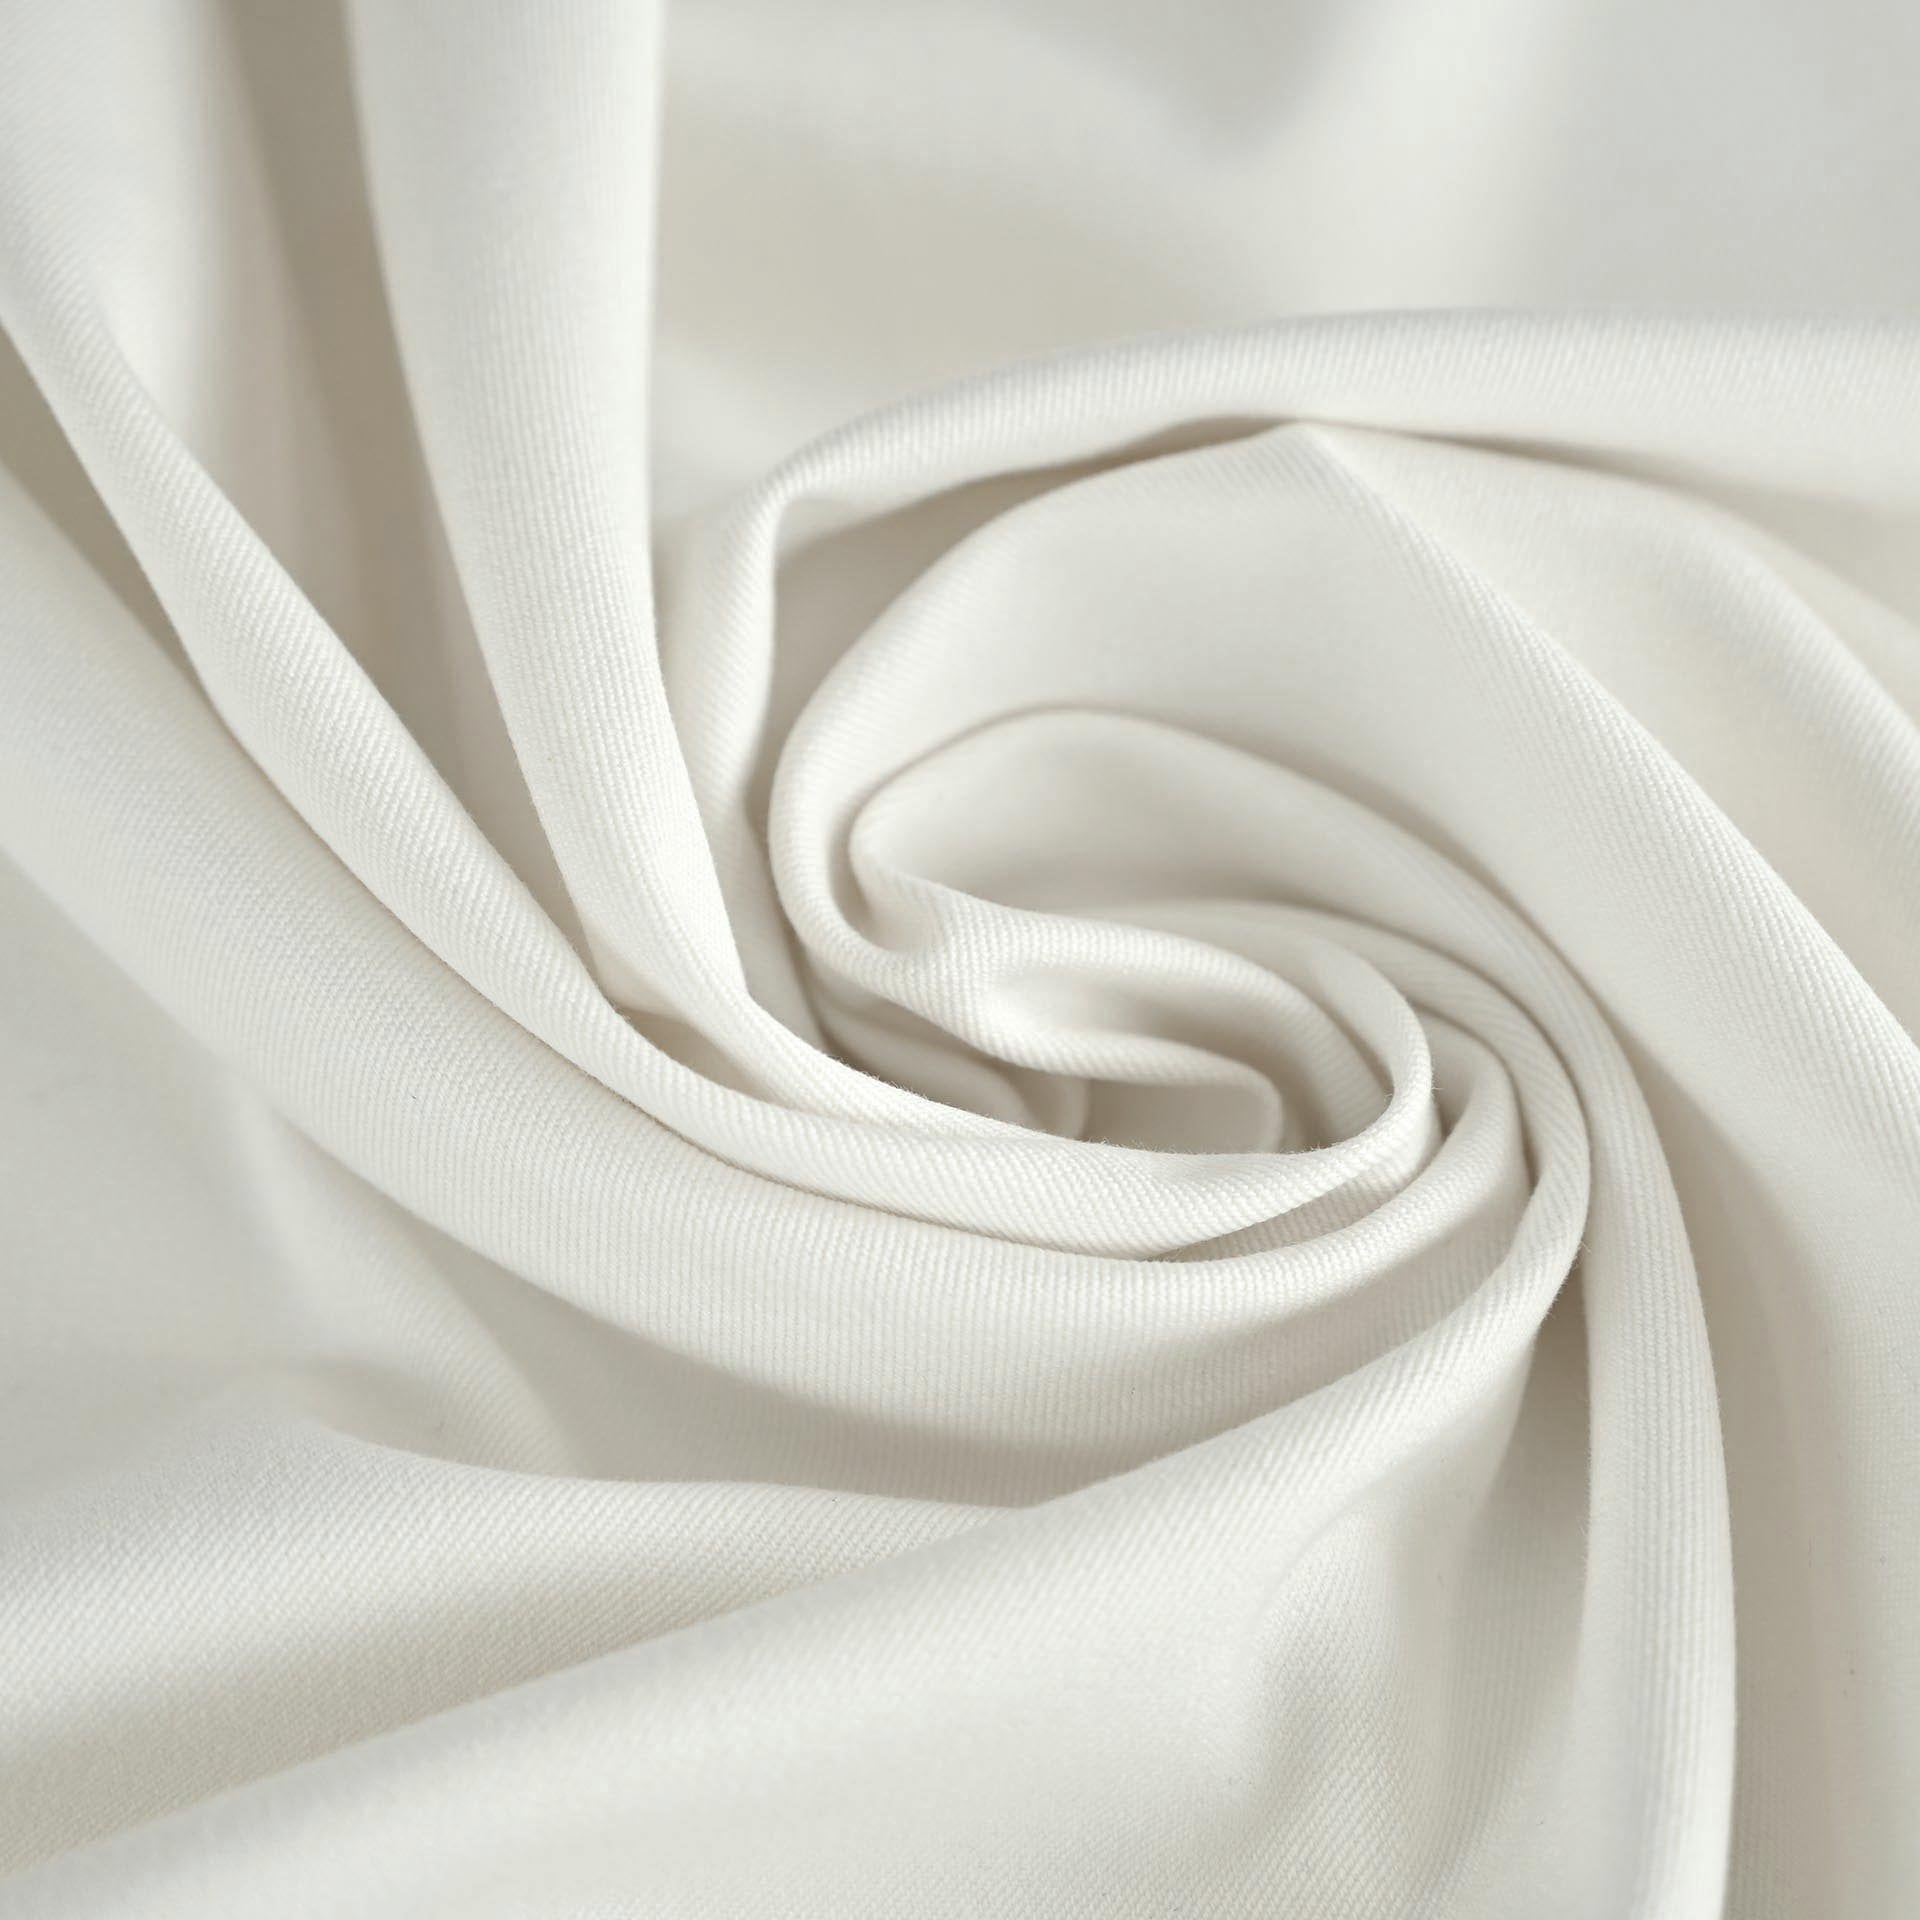 White Stretch Twill Fabric 98104